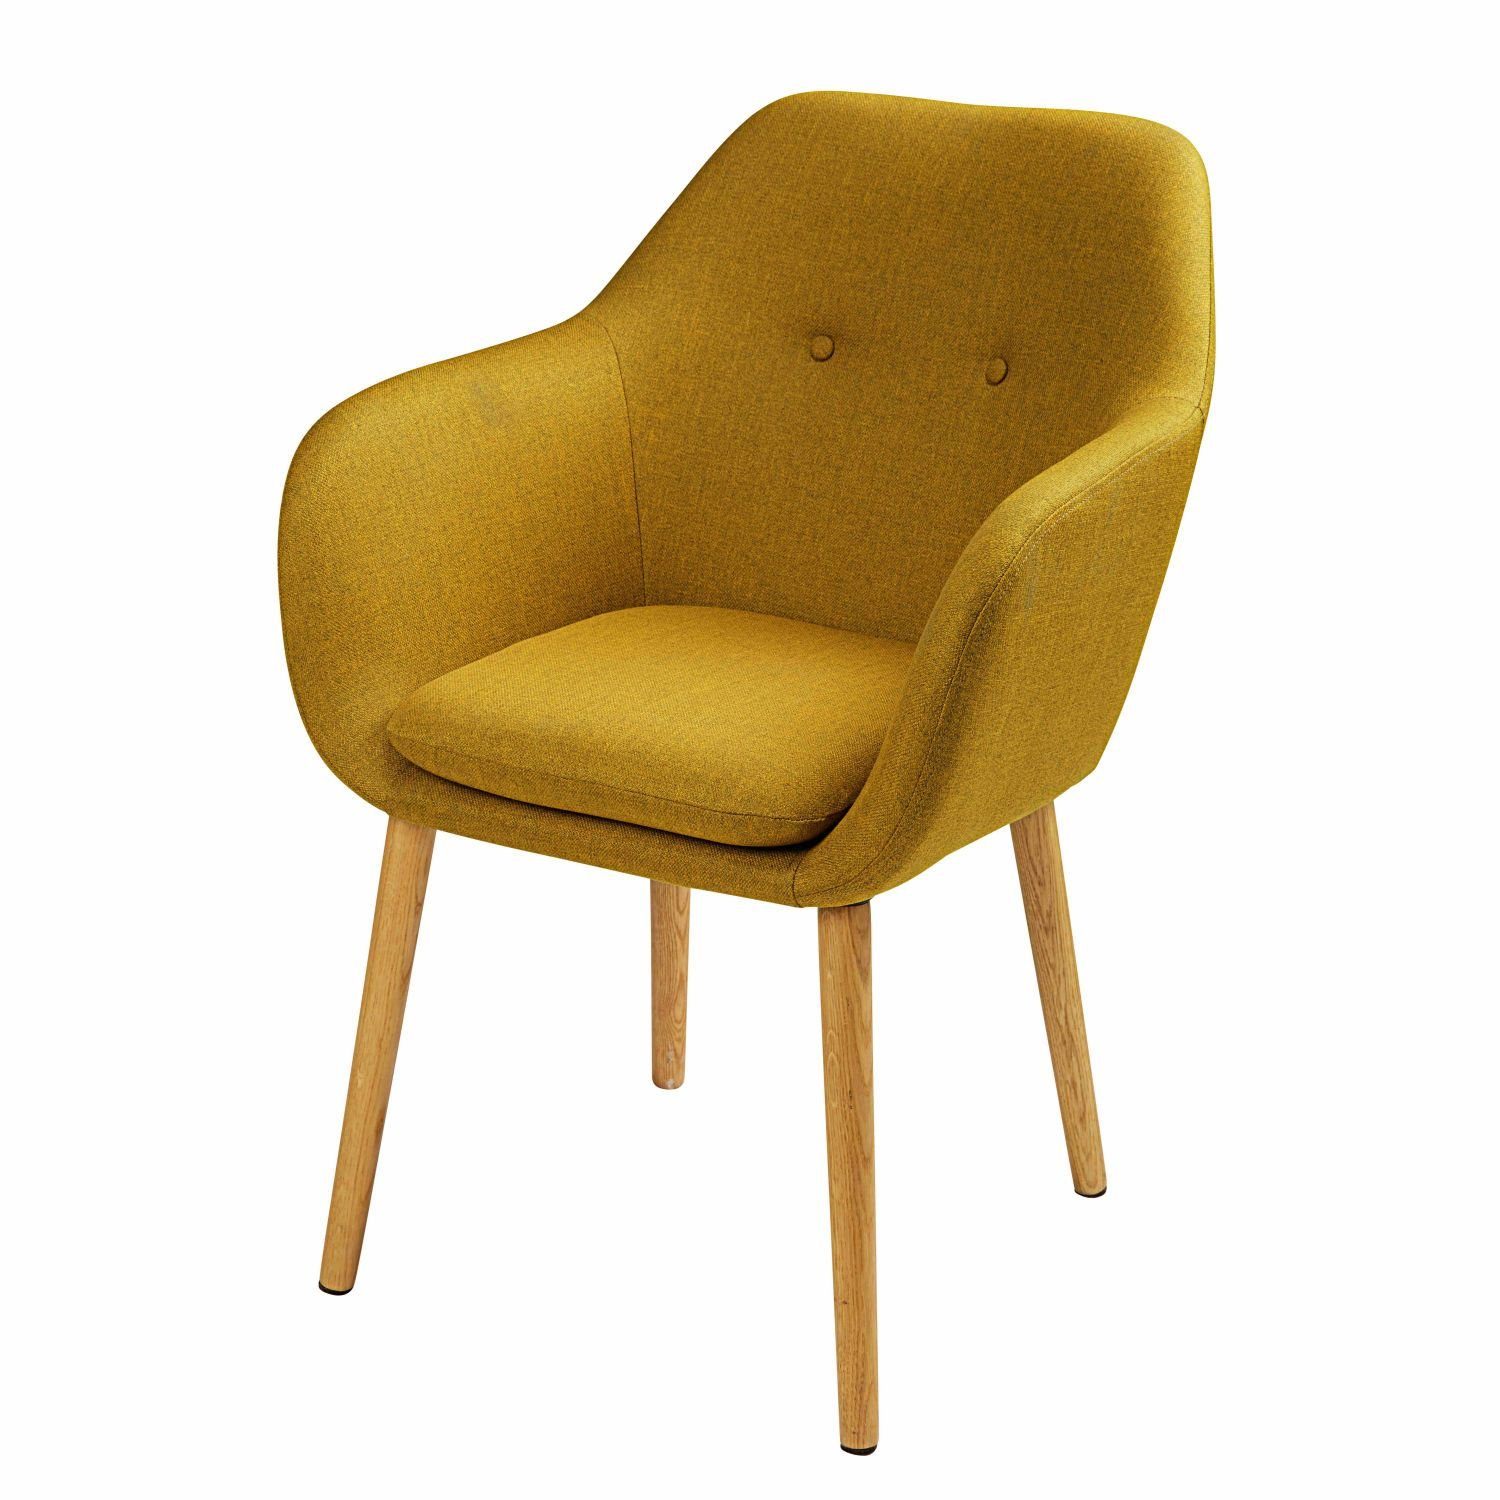 Yellow chair. Стул мягкий горчичный. Стул кресло. Стул желтый. Горчичное кресло стул.